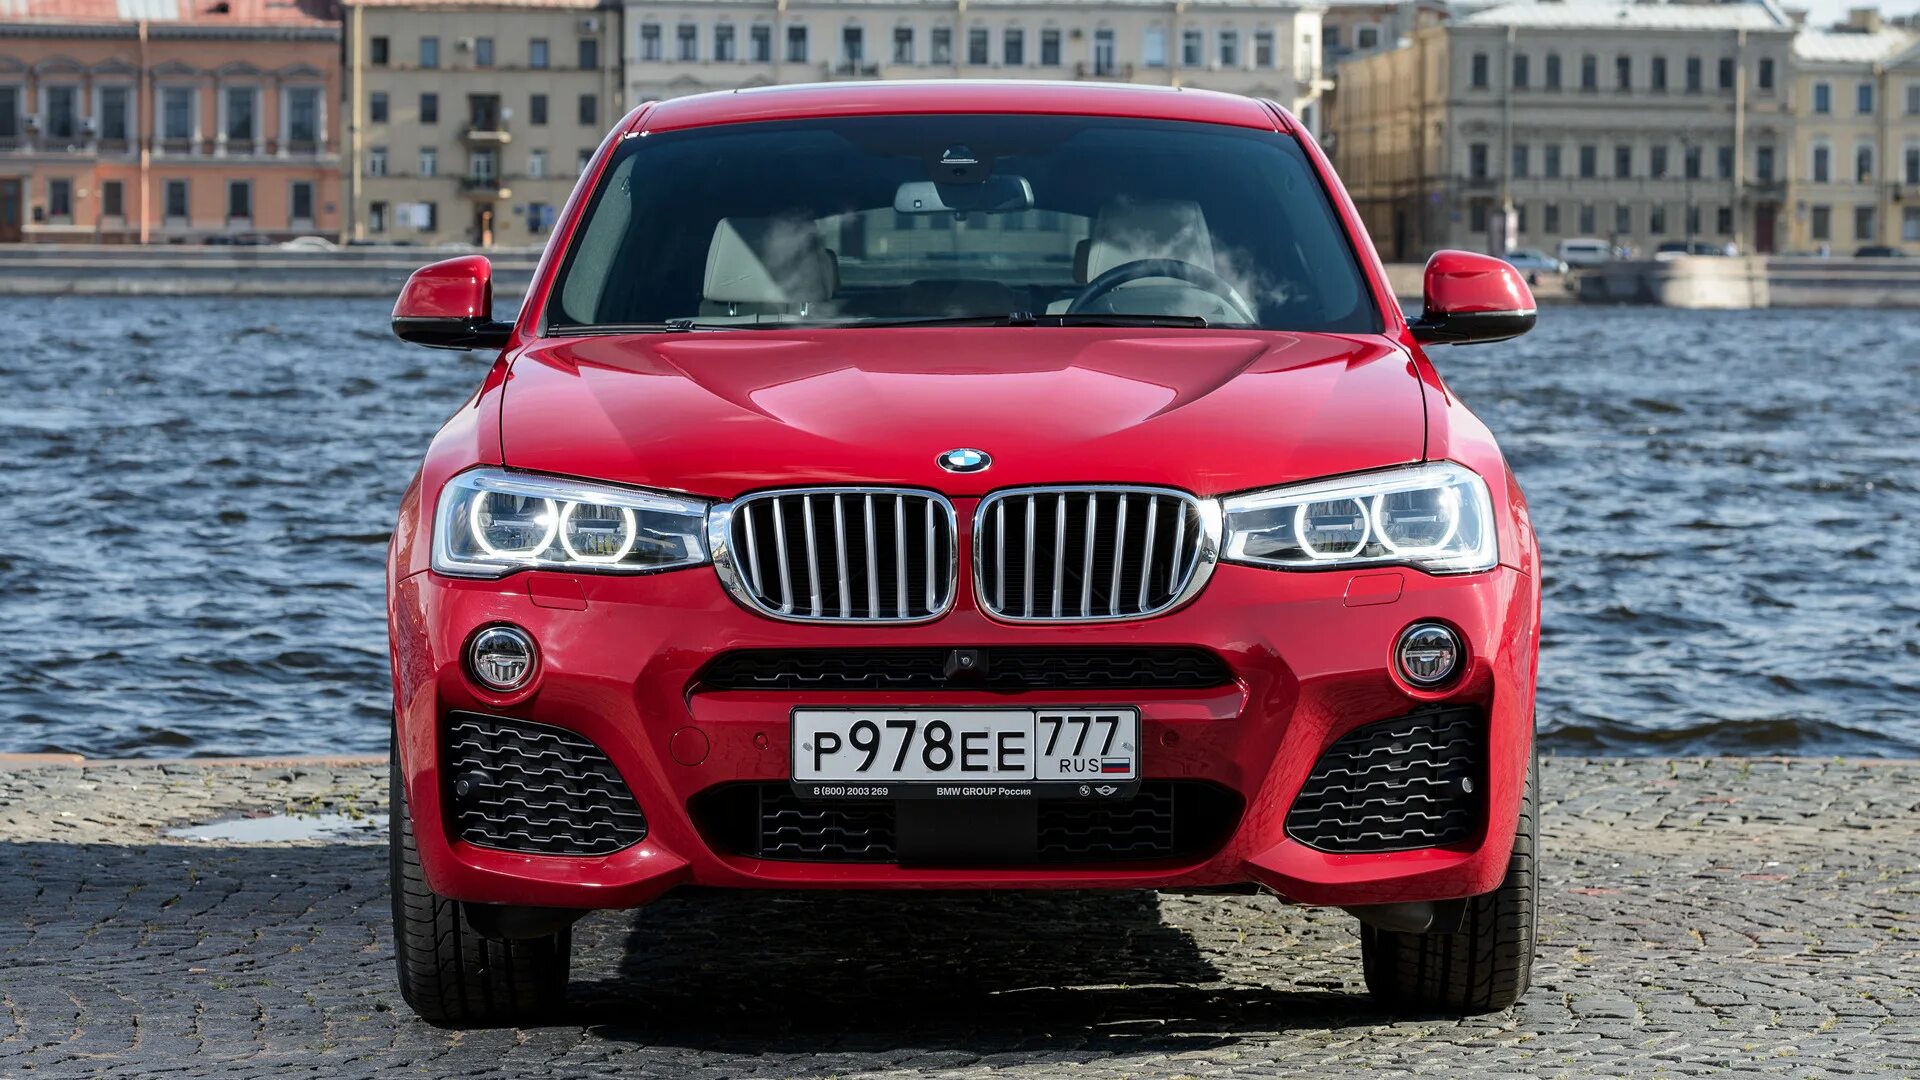 БМВ х3 красная. BMW x3 2014 красная. BMW x4 f26. БМВ x4 xdrive30d. Купить новую бмв в россии